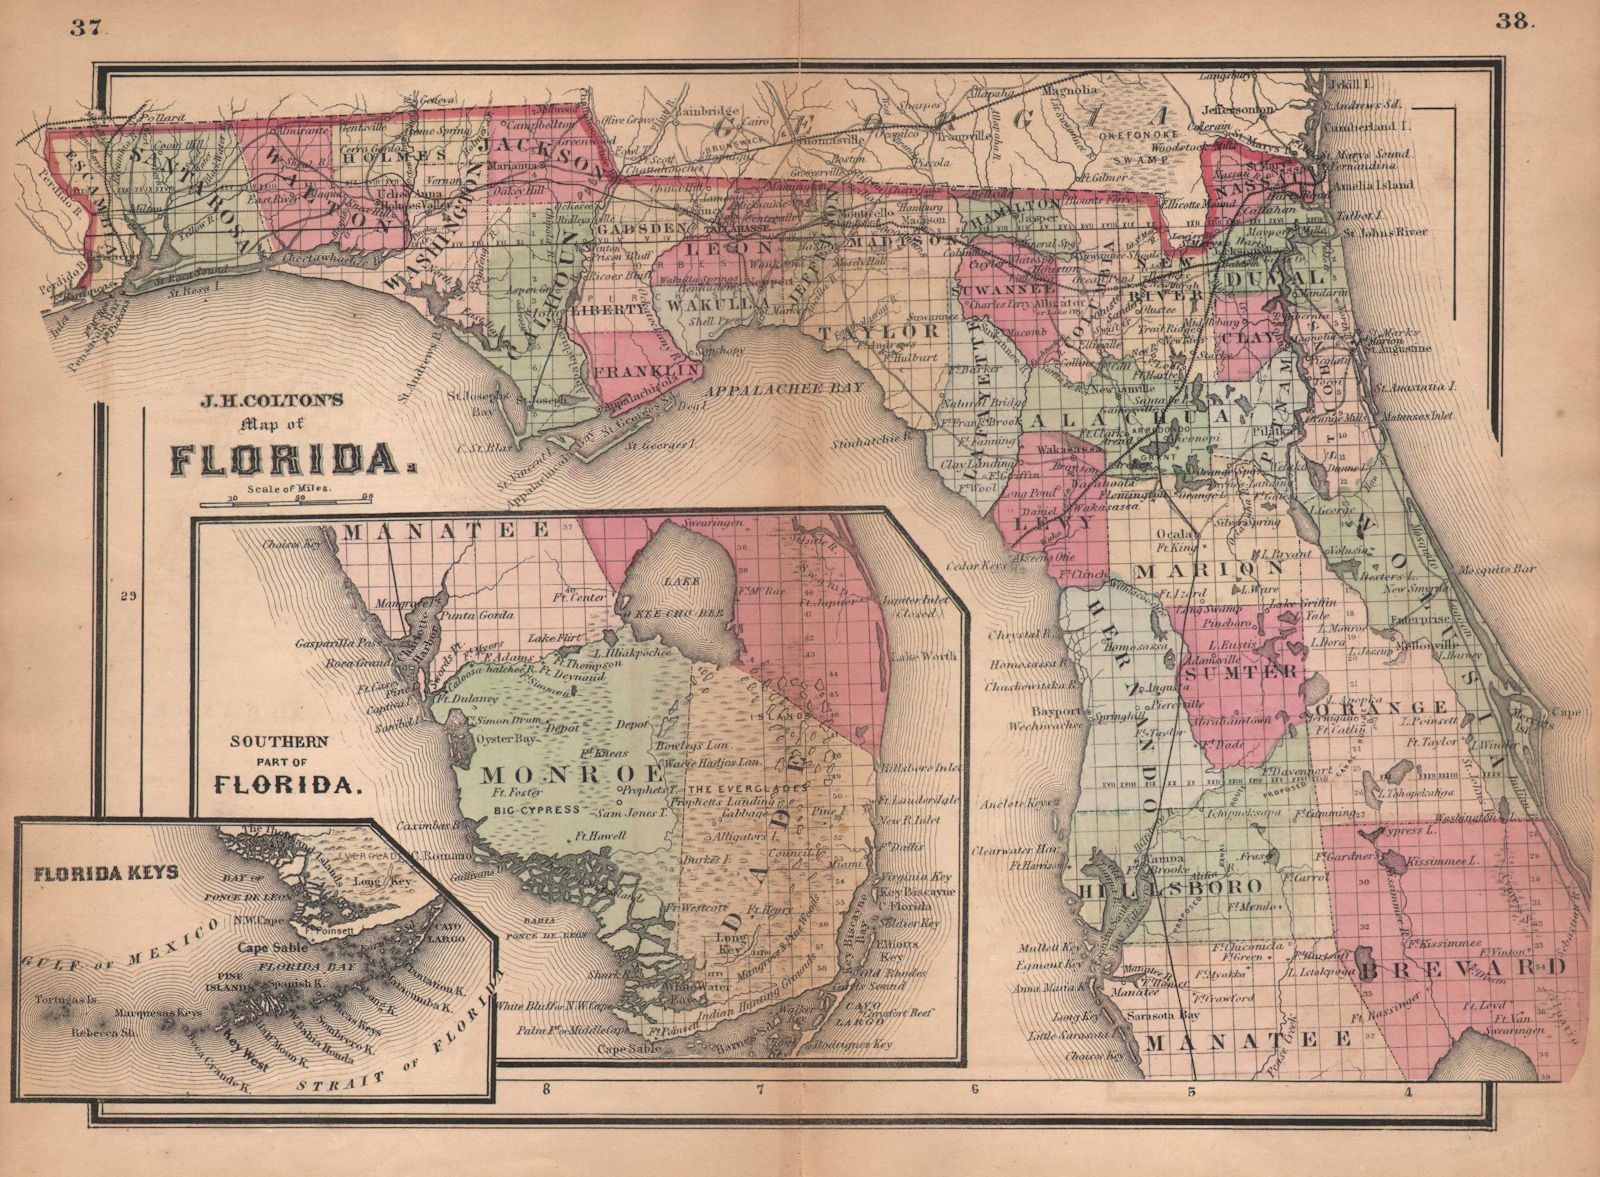 Associate Product J. H. Colton's map of Florida 1864 old antique vintage plan chart